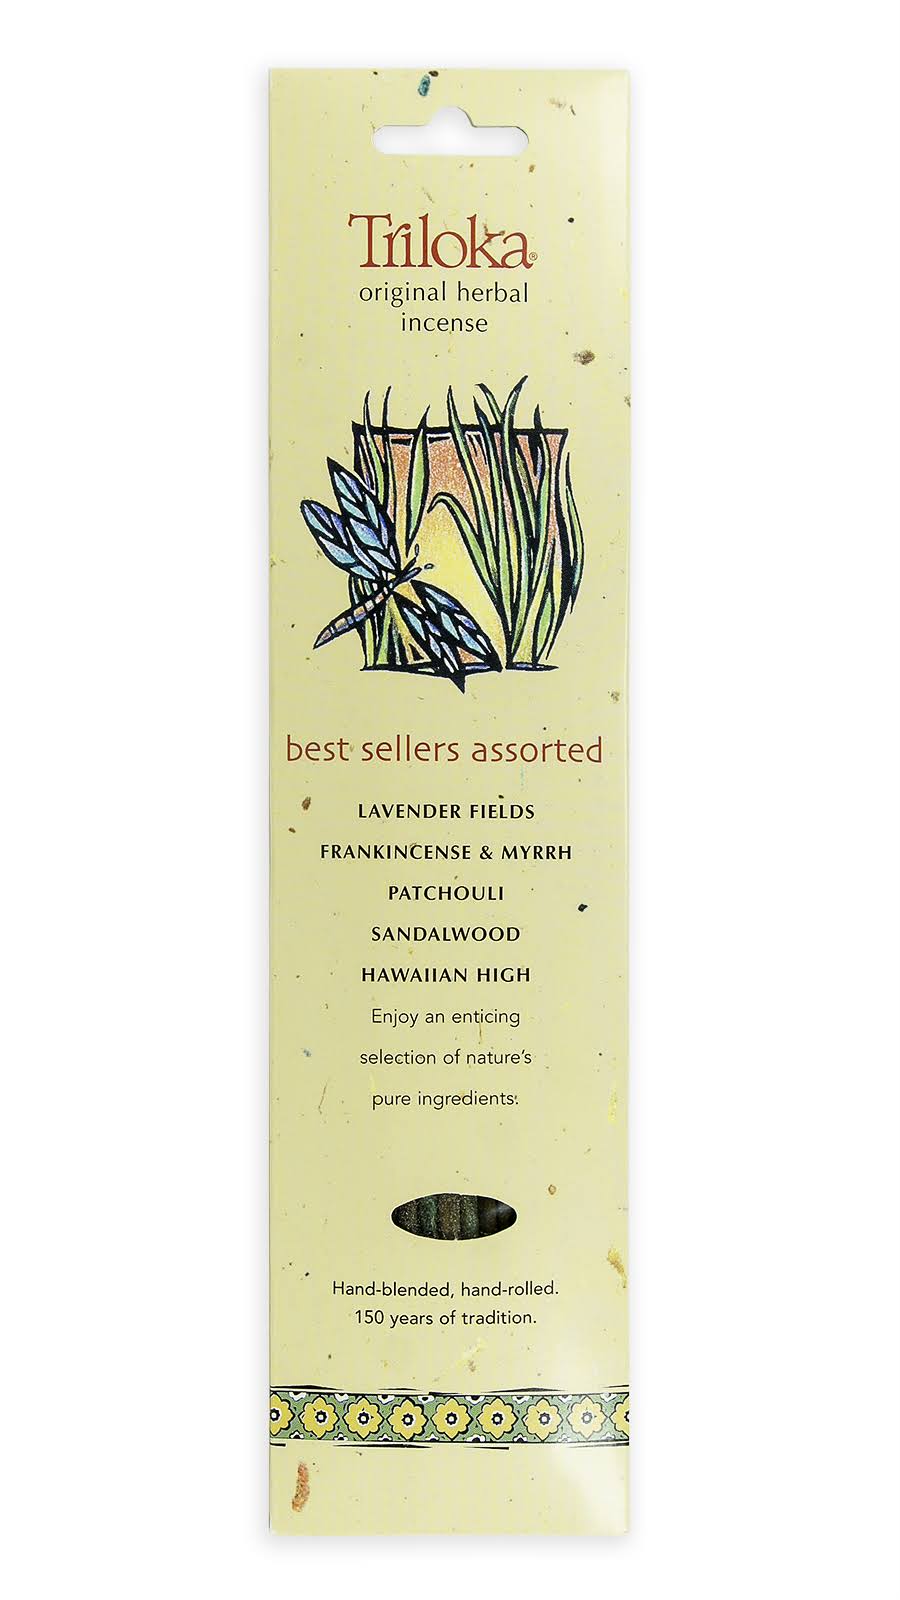 Triloka Best Sellers Assorted Original Incense Sticks